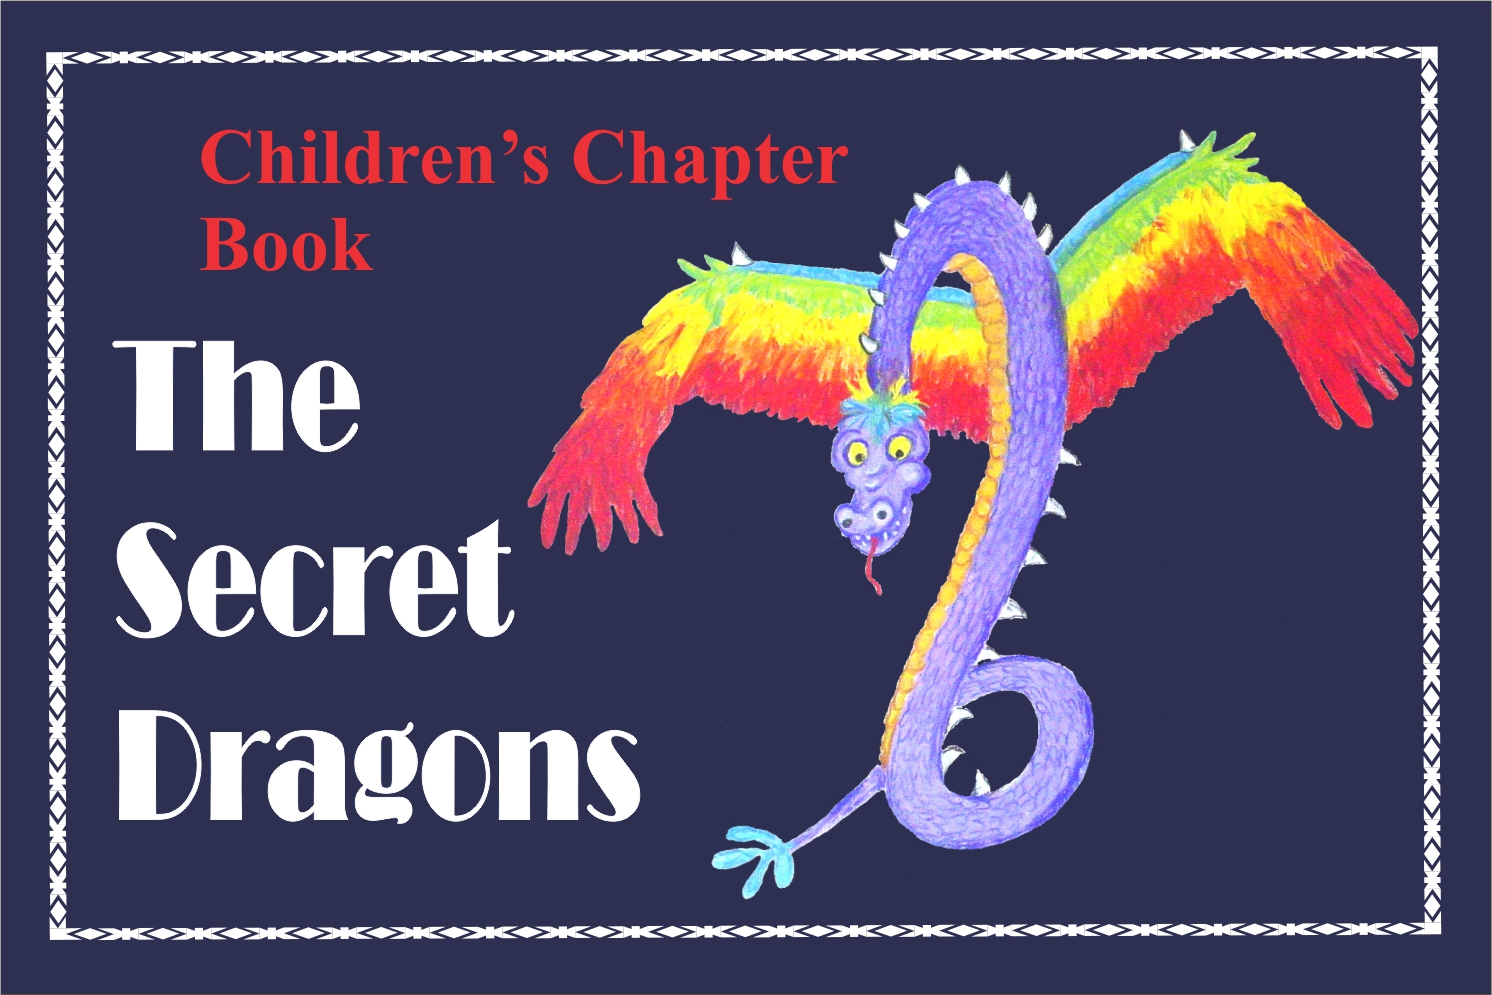 The Secret Dragons